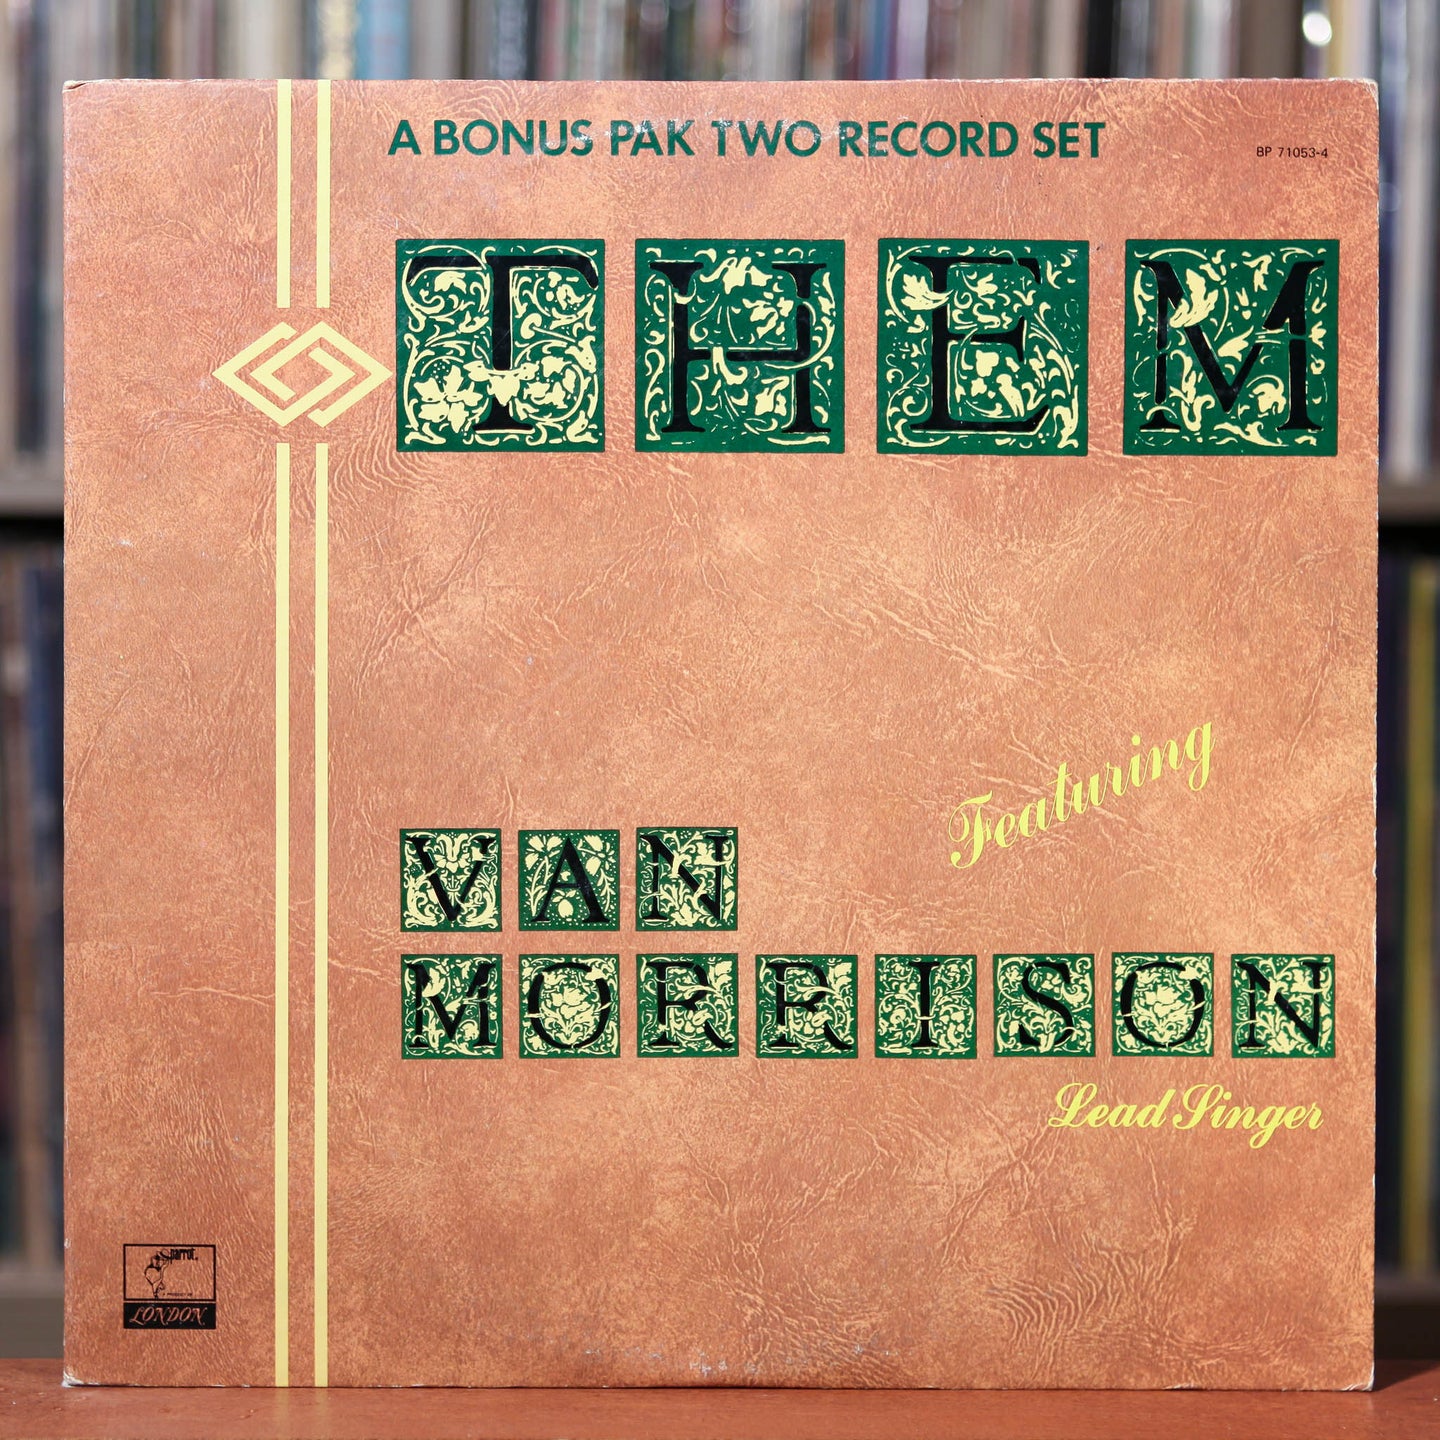 Them - Featuring Van Morrison - 2LP - 1972 London, VG++/VG